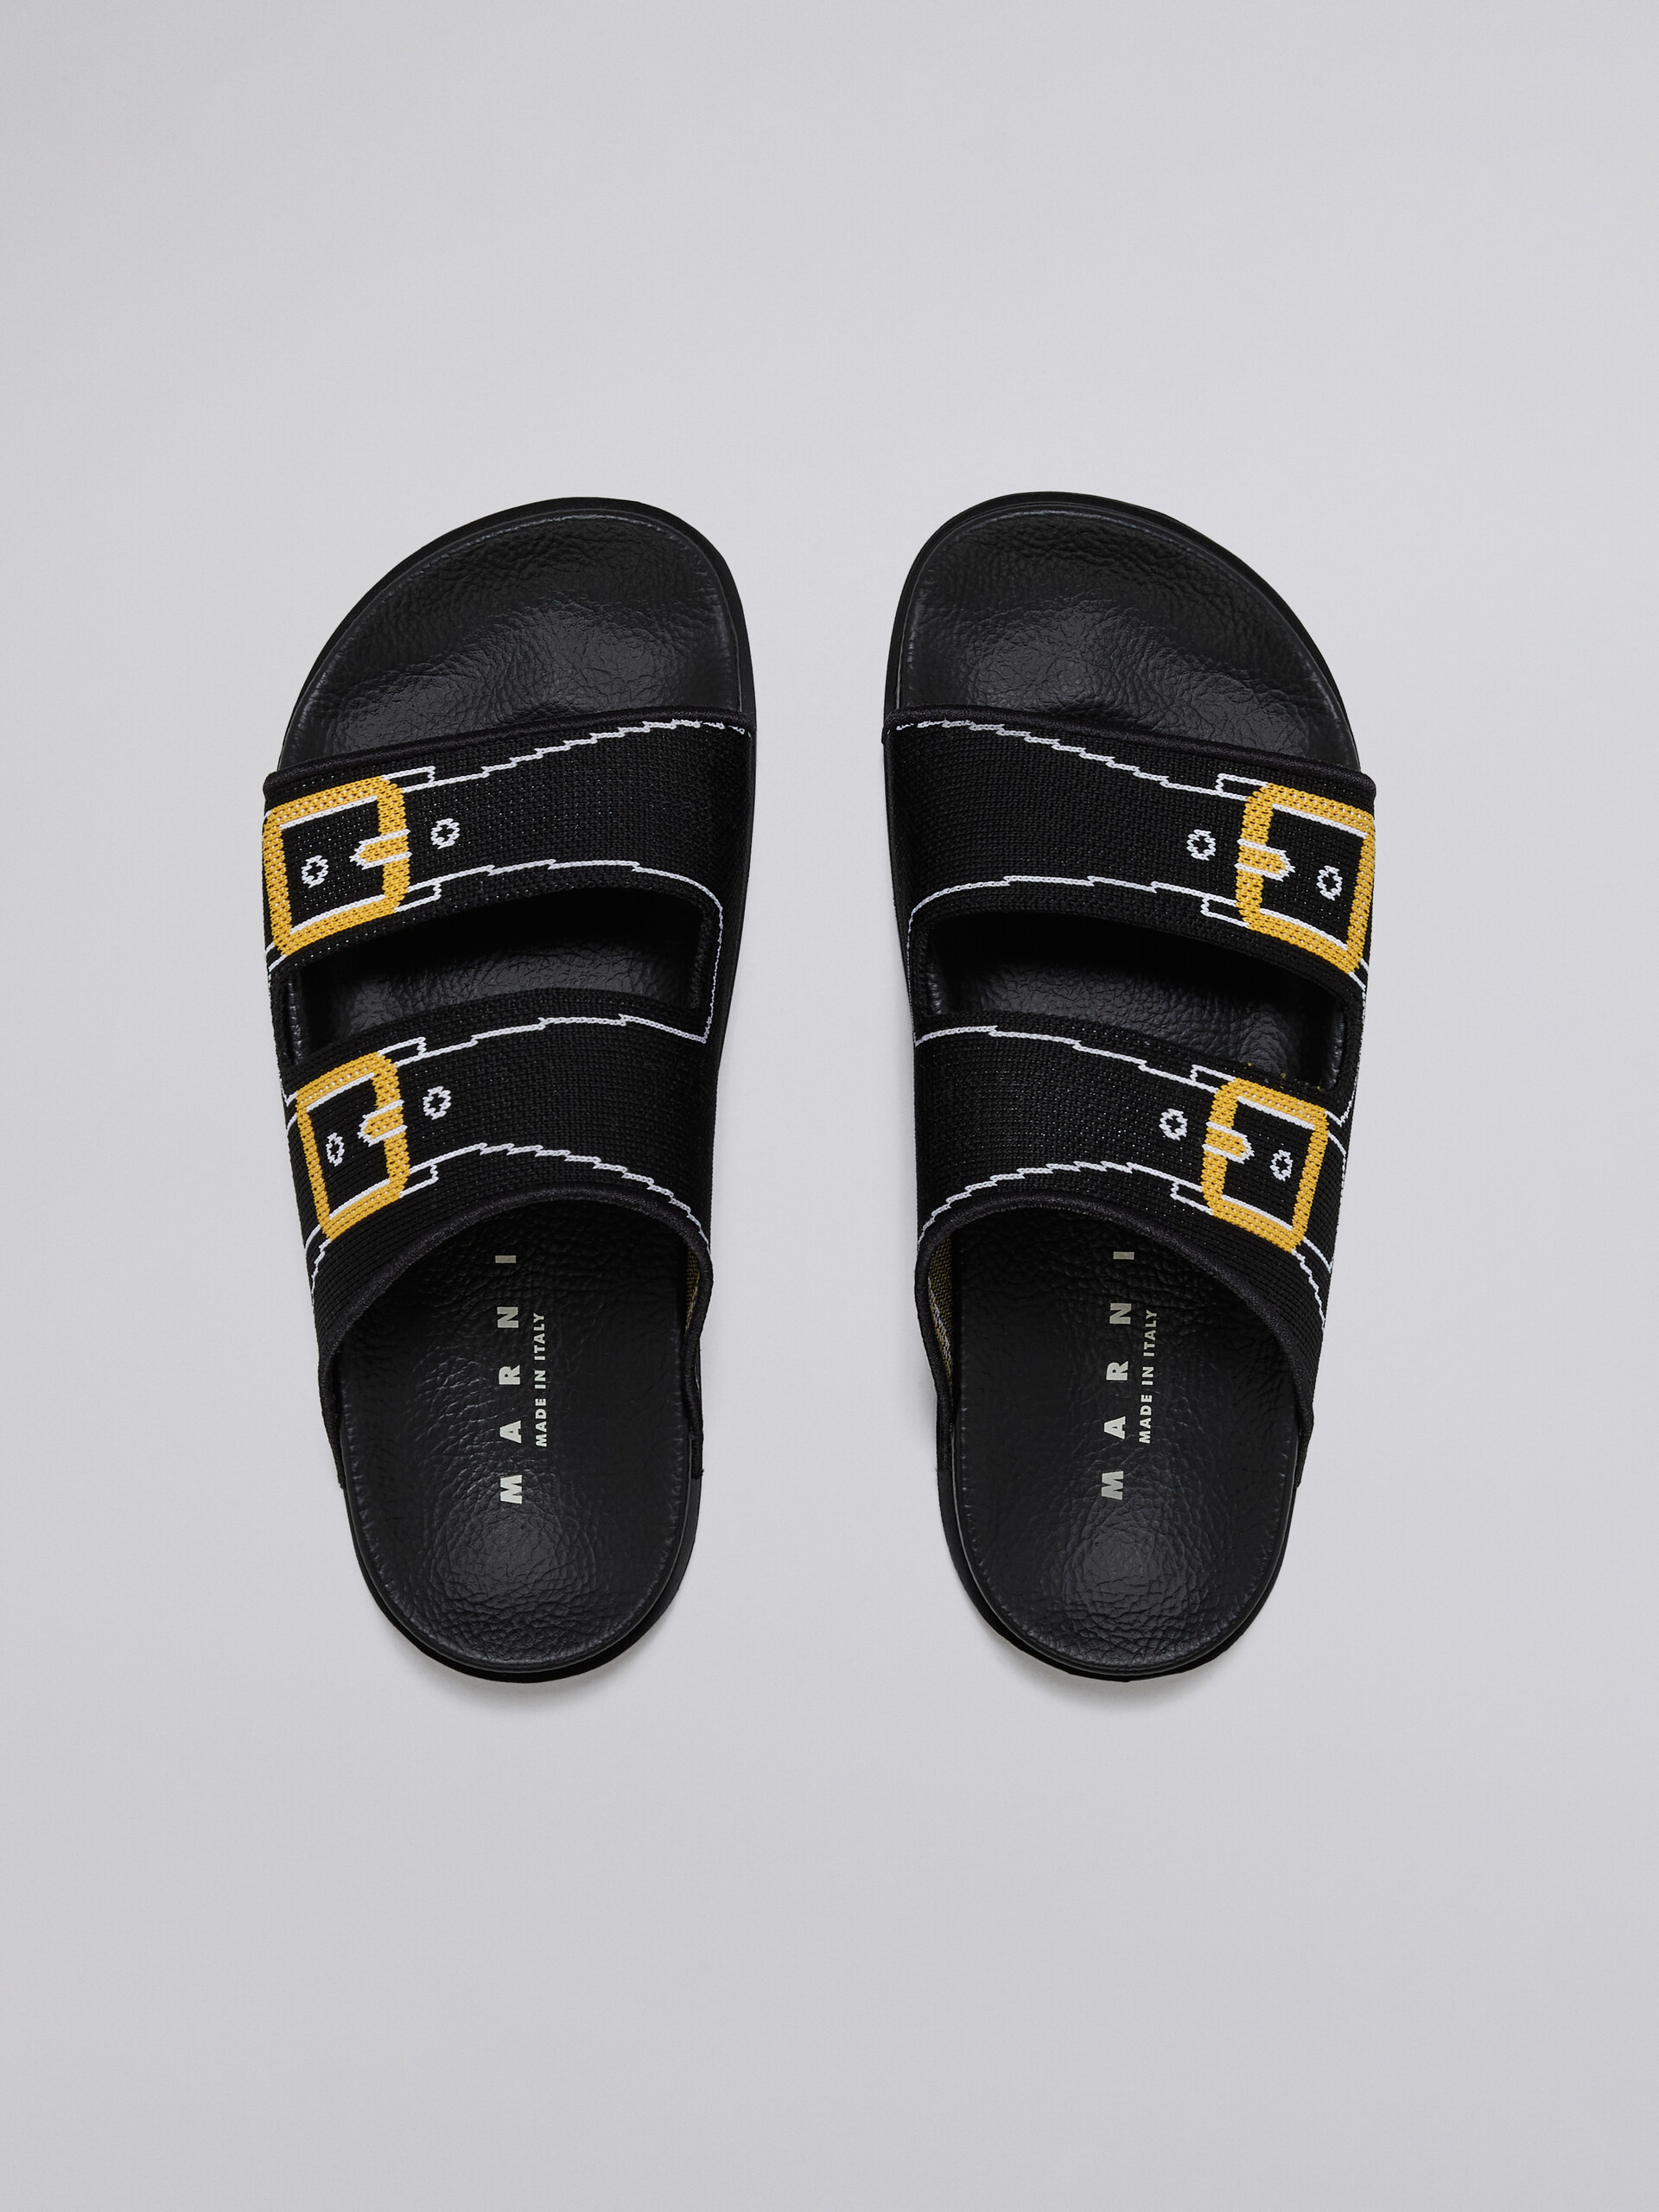 Black and gold trompe l'oeil jacquard two-strap slide - Sandals - Image 4